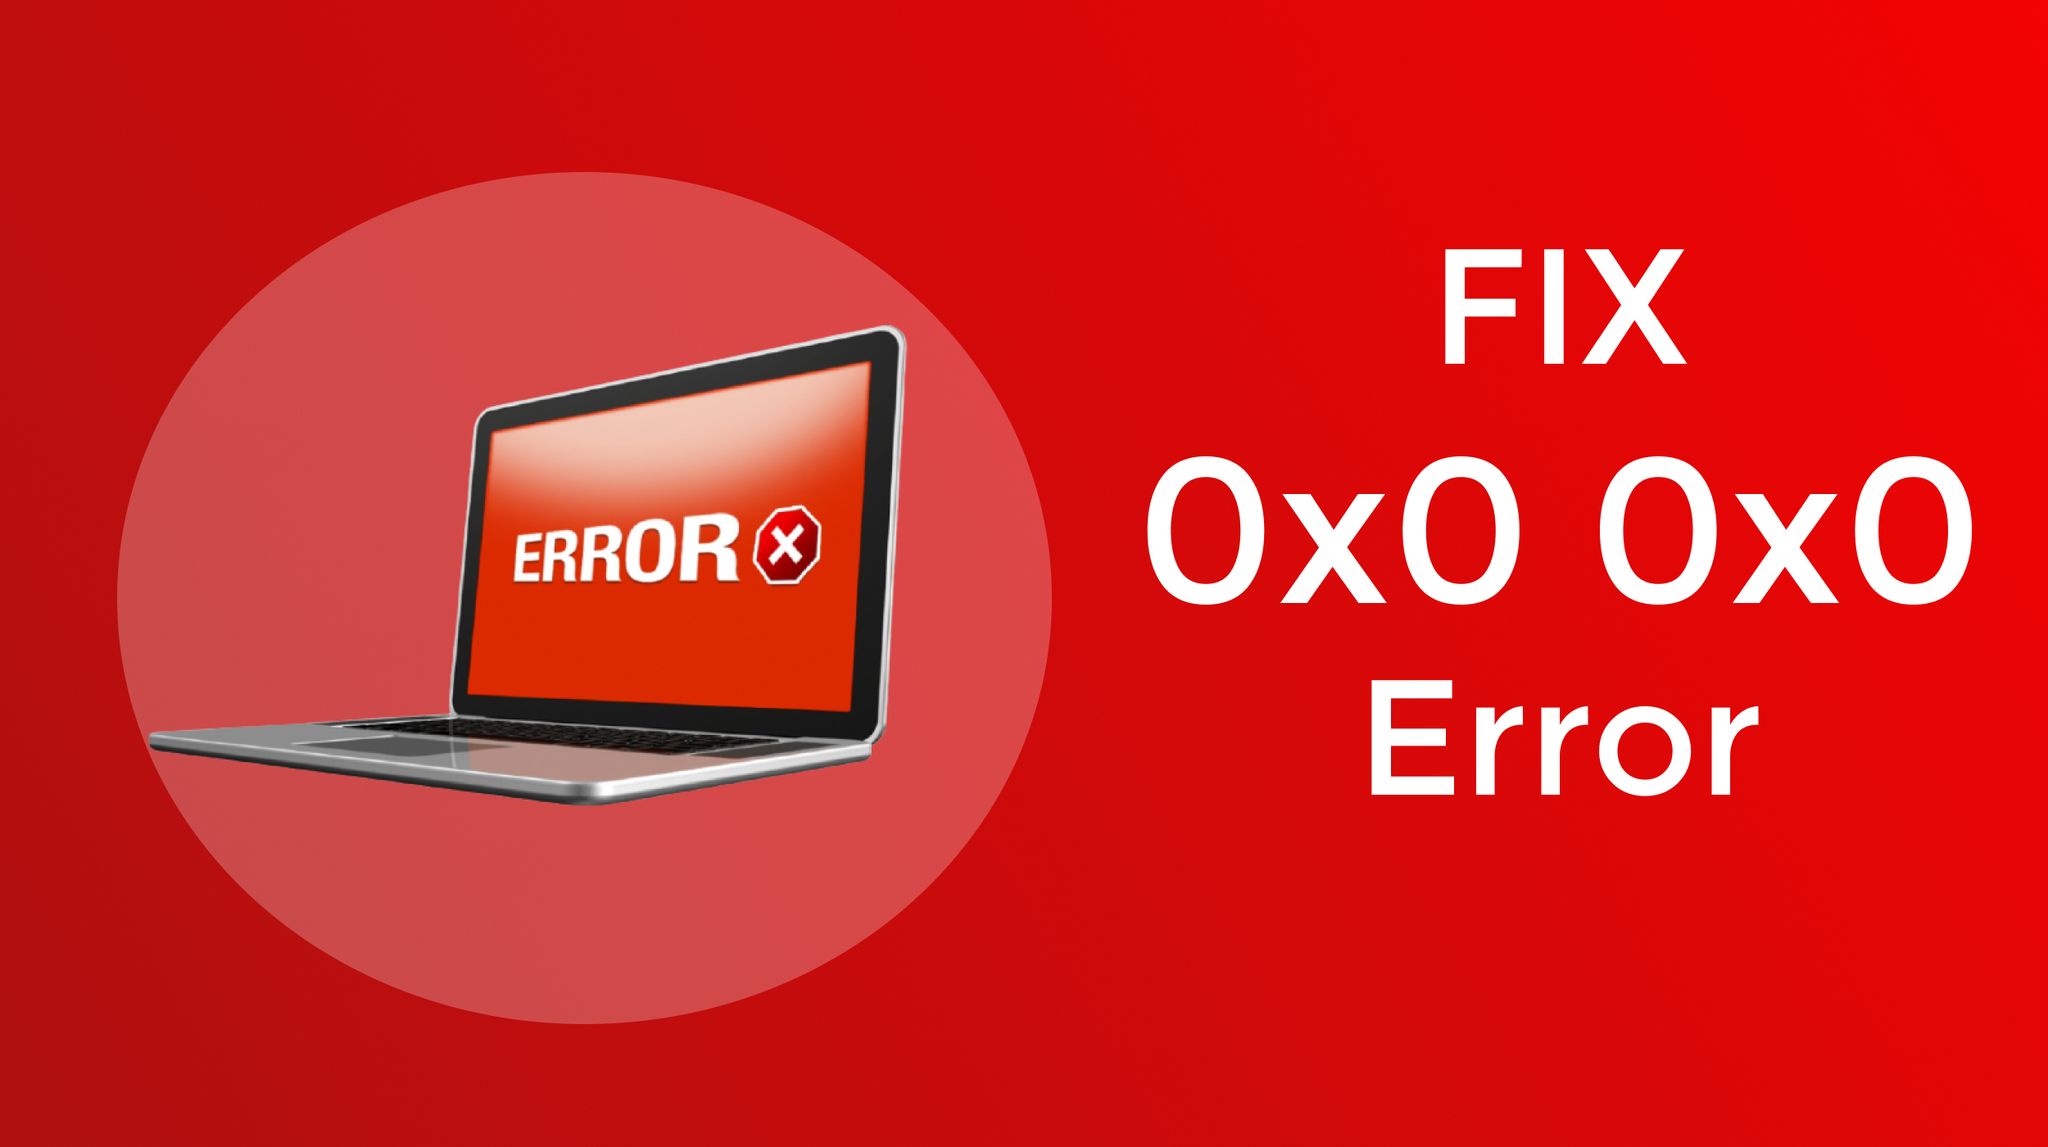 How to fix error code 0x0 0x0? Easy Ways to Solve It in 2022